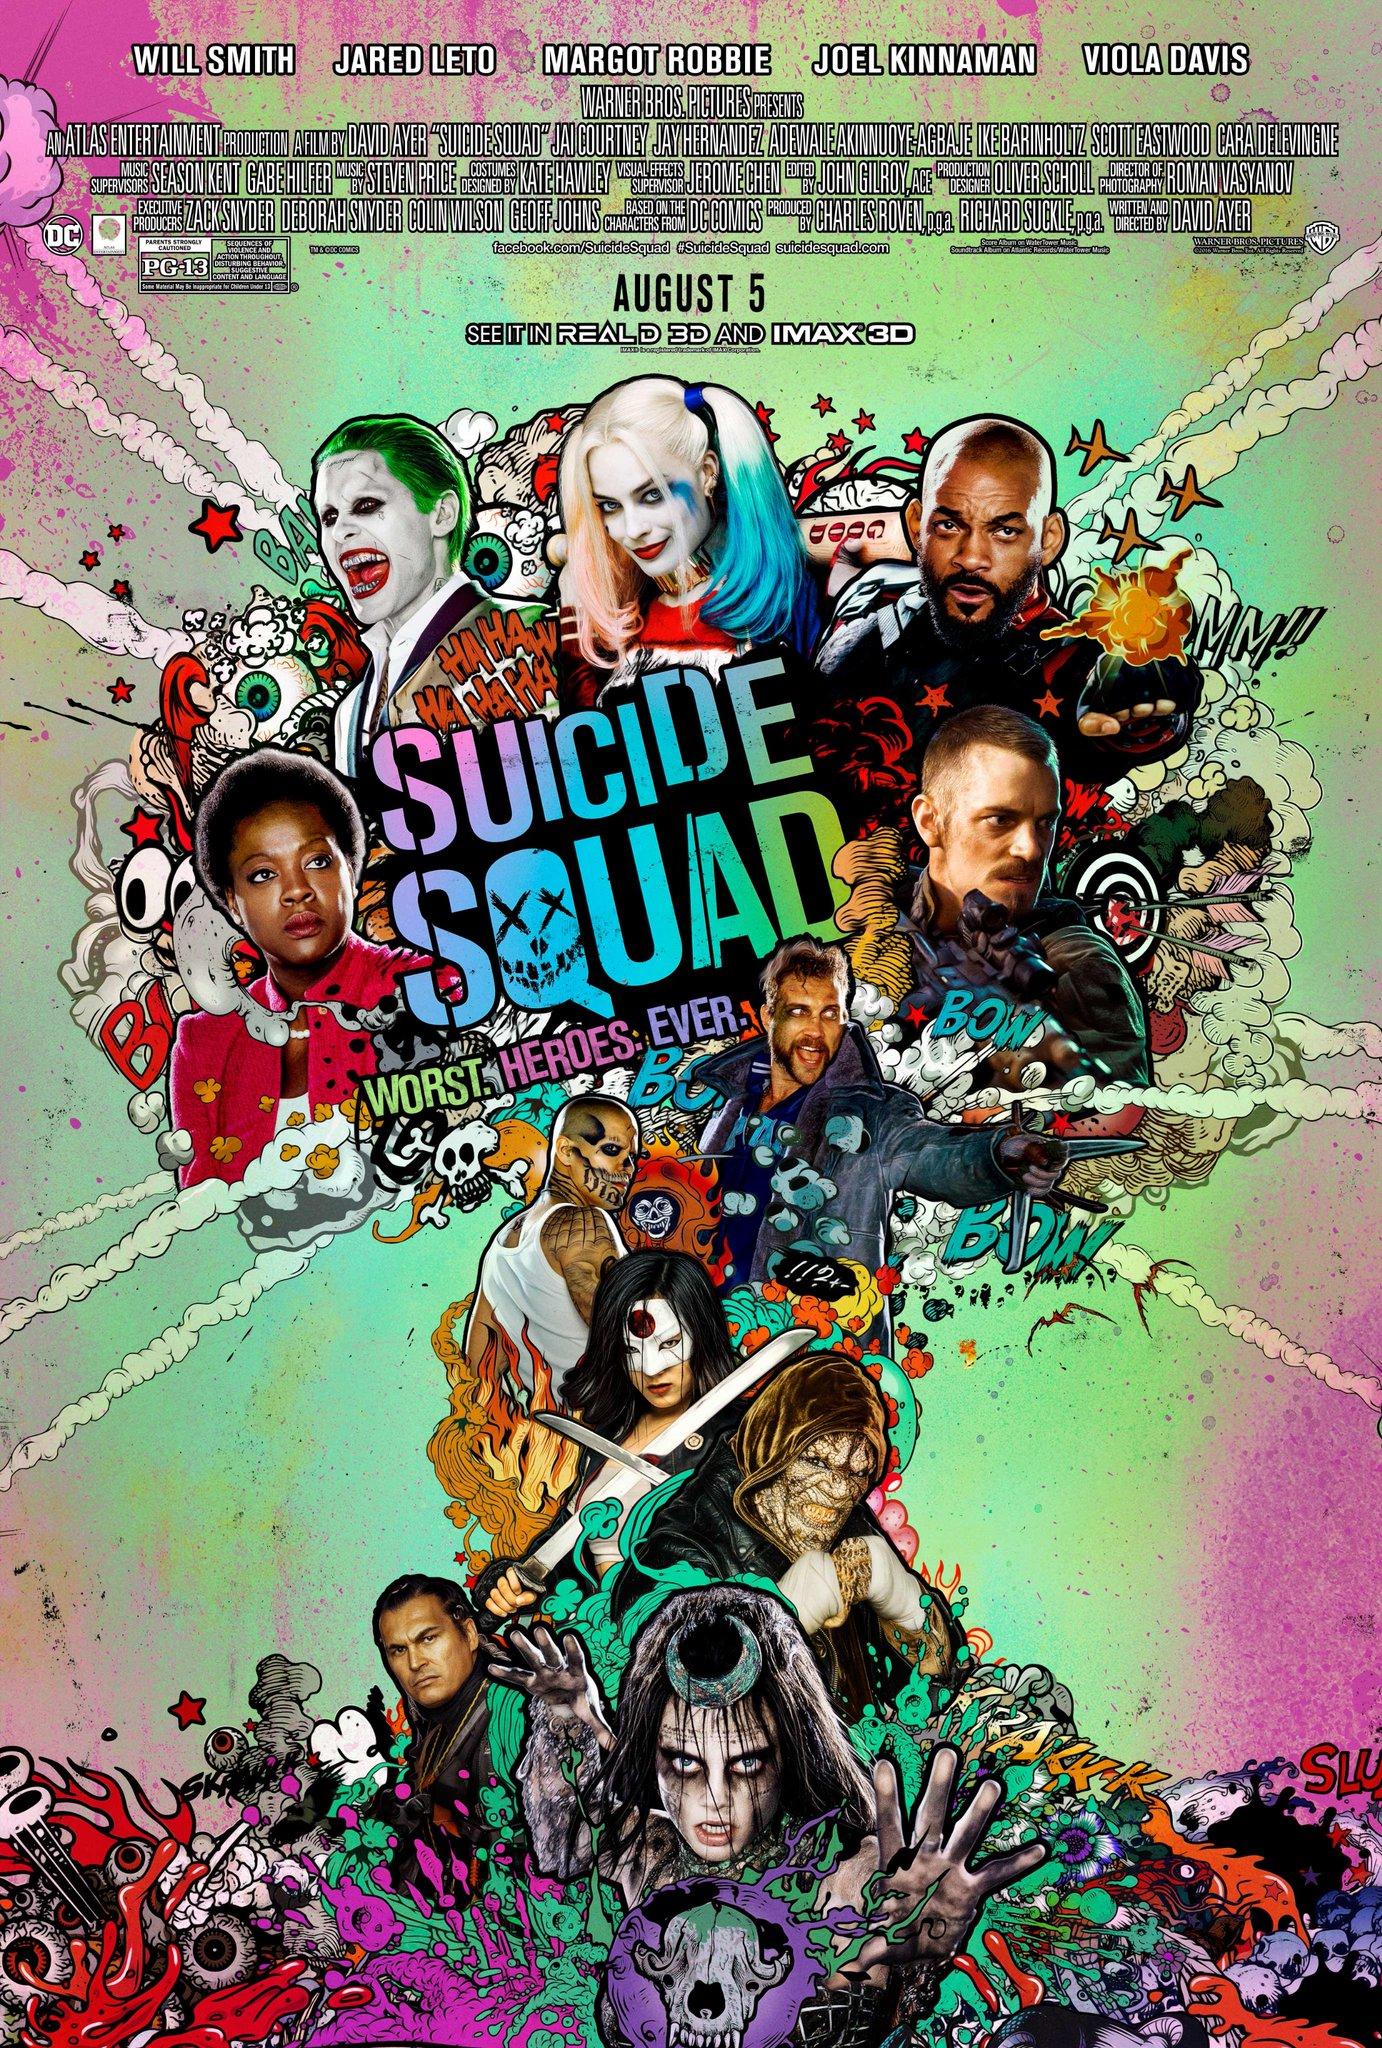 Captain Boomerang image Suicide Squad Poster HD wallpaper